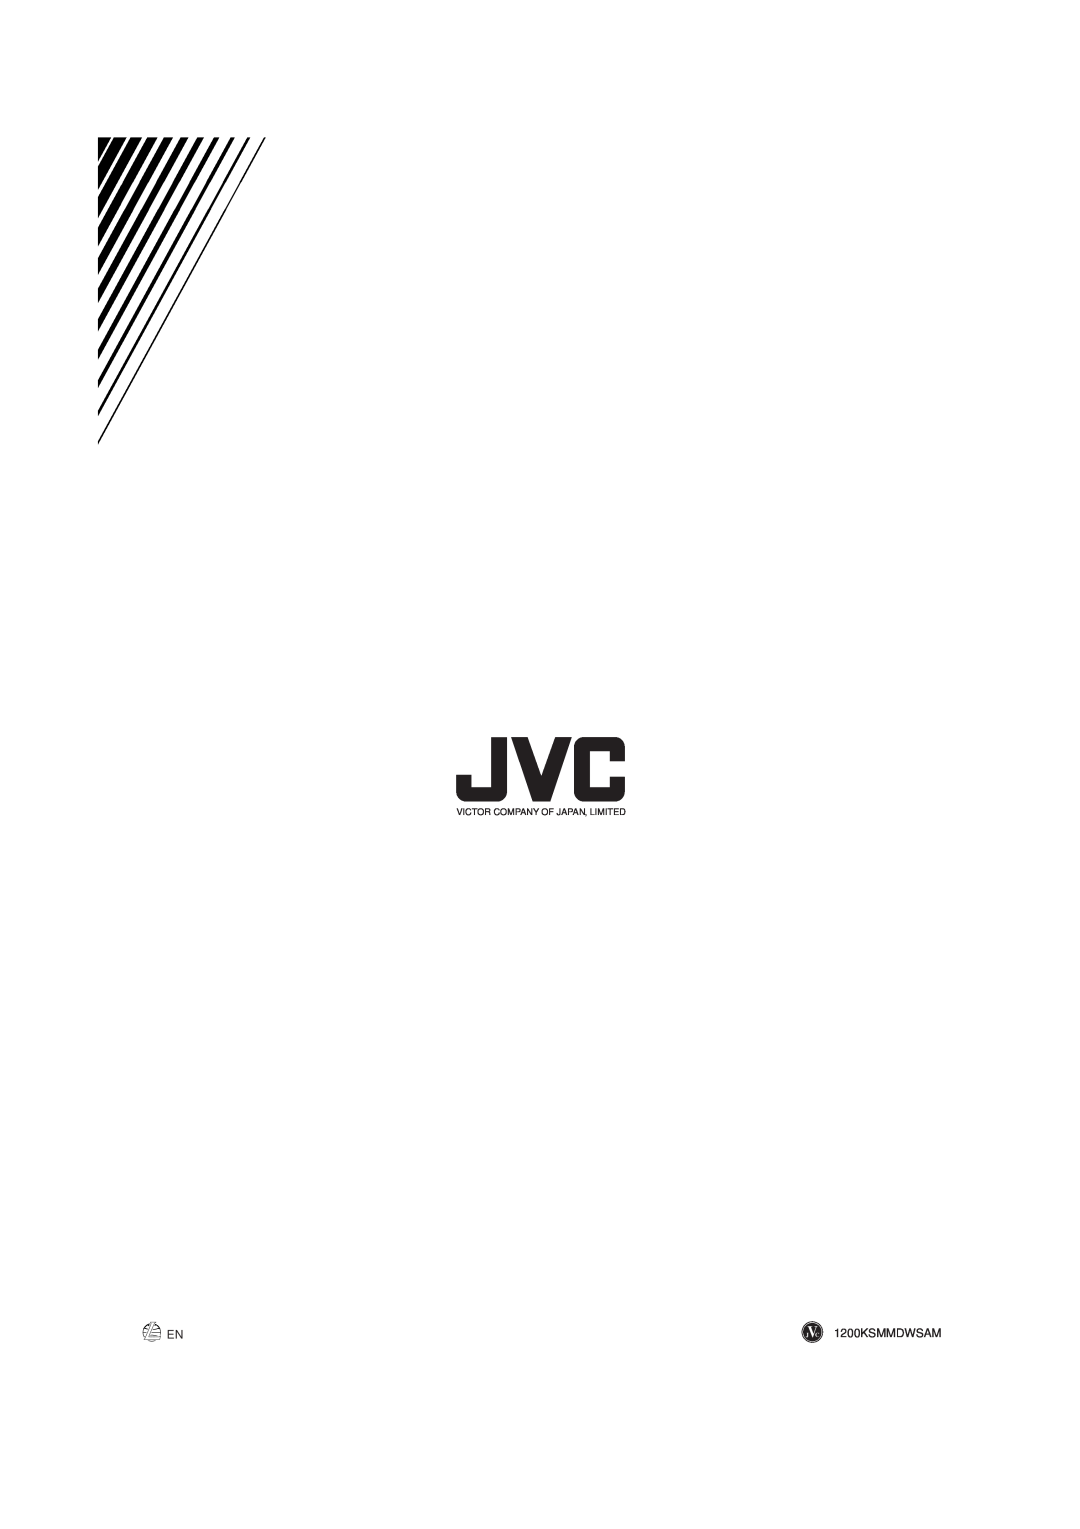 JVC MX-G50 manual 1200KSMMDWSAM, Victor Company Of Japan, Limited 